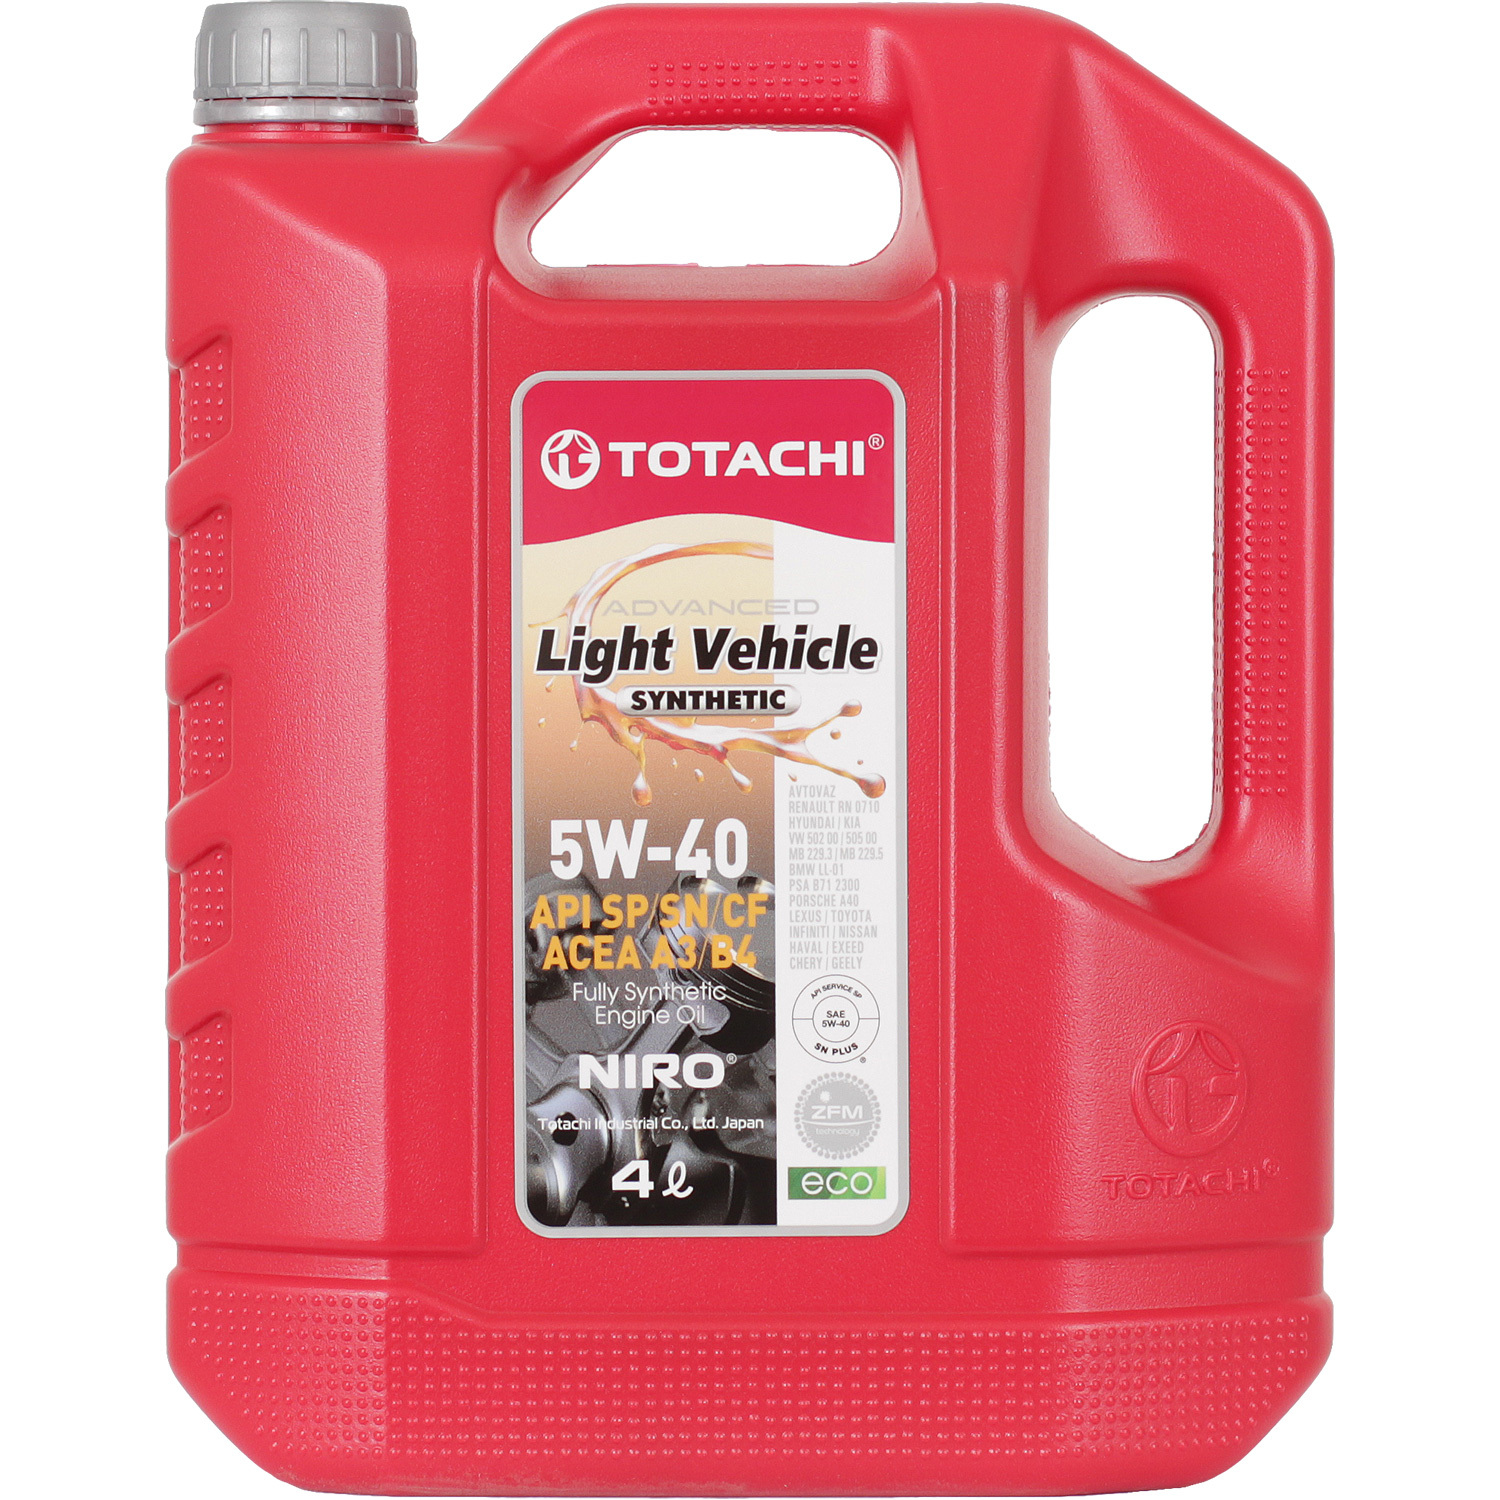 Totachi Моторное масло Totachi NIRO LV Synthetic 5W-40, 4 л масло моторное totachi niro lv sae 5w 30 api sp sn plus синтетическое 19 л